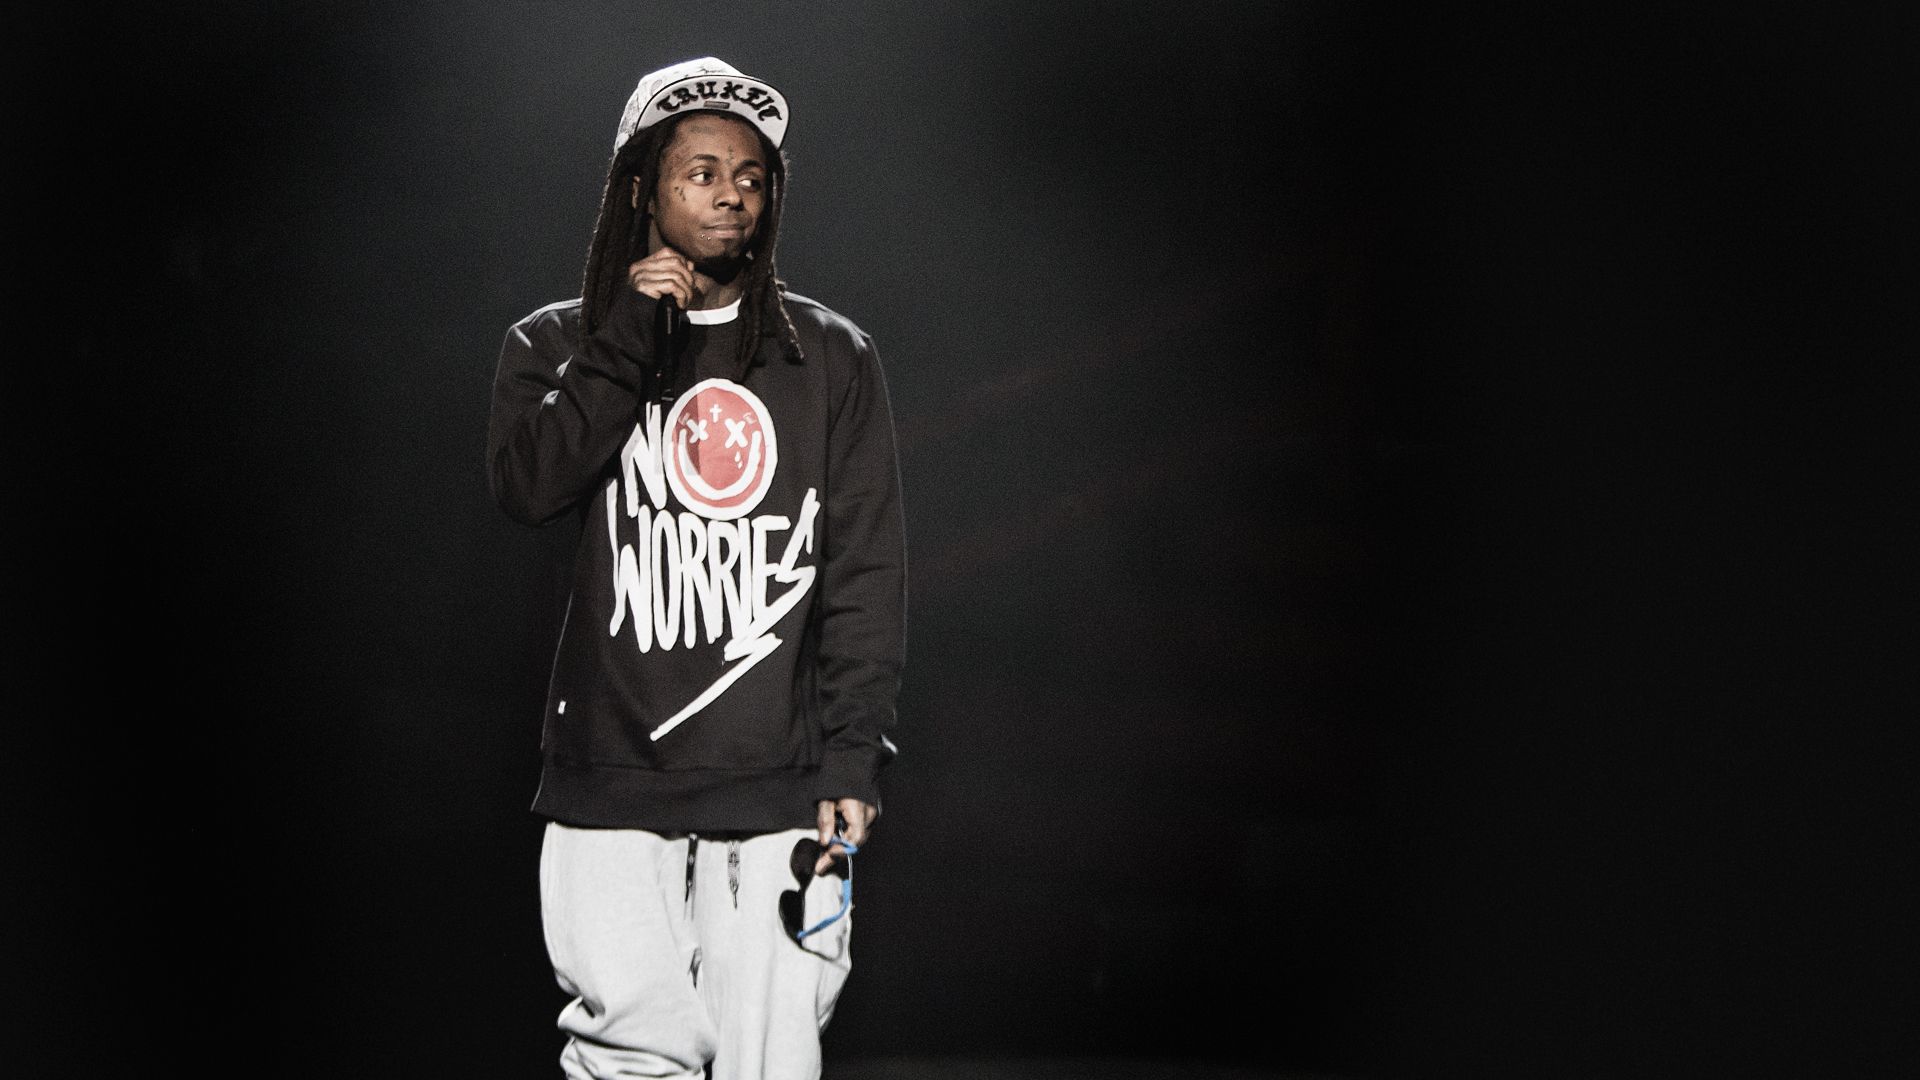 Fonds d'écran Lil Wayne : tous les wallpapers Lil Wayne